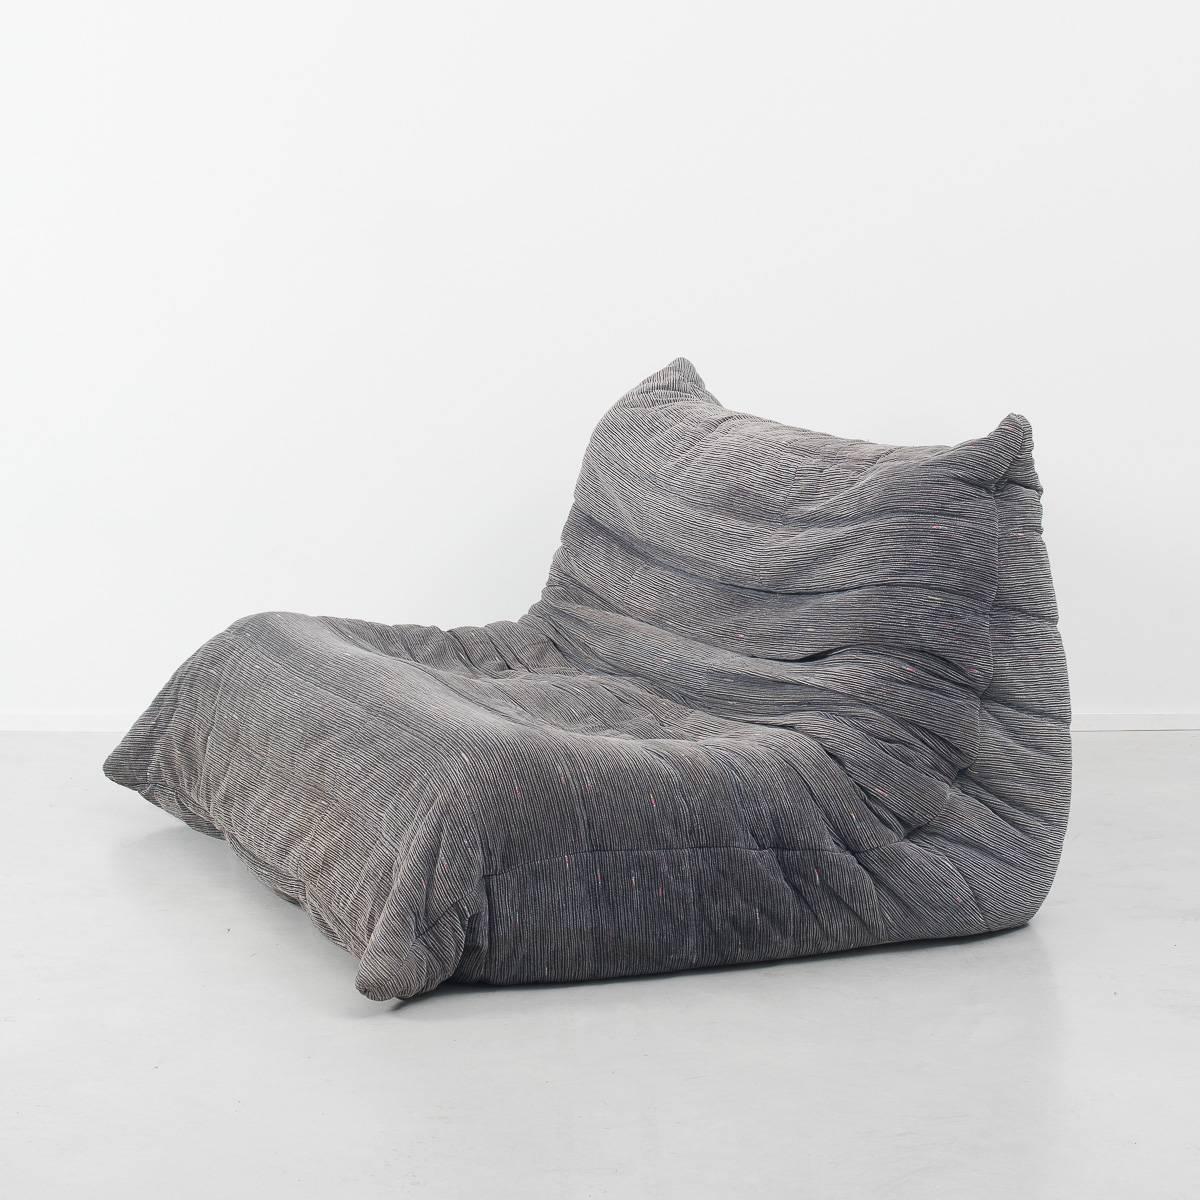 Michel Ducaroy “Togo” Two Seater Sofa